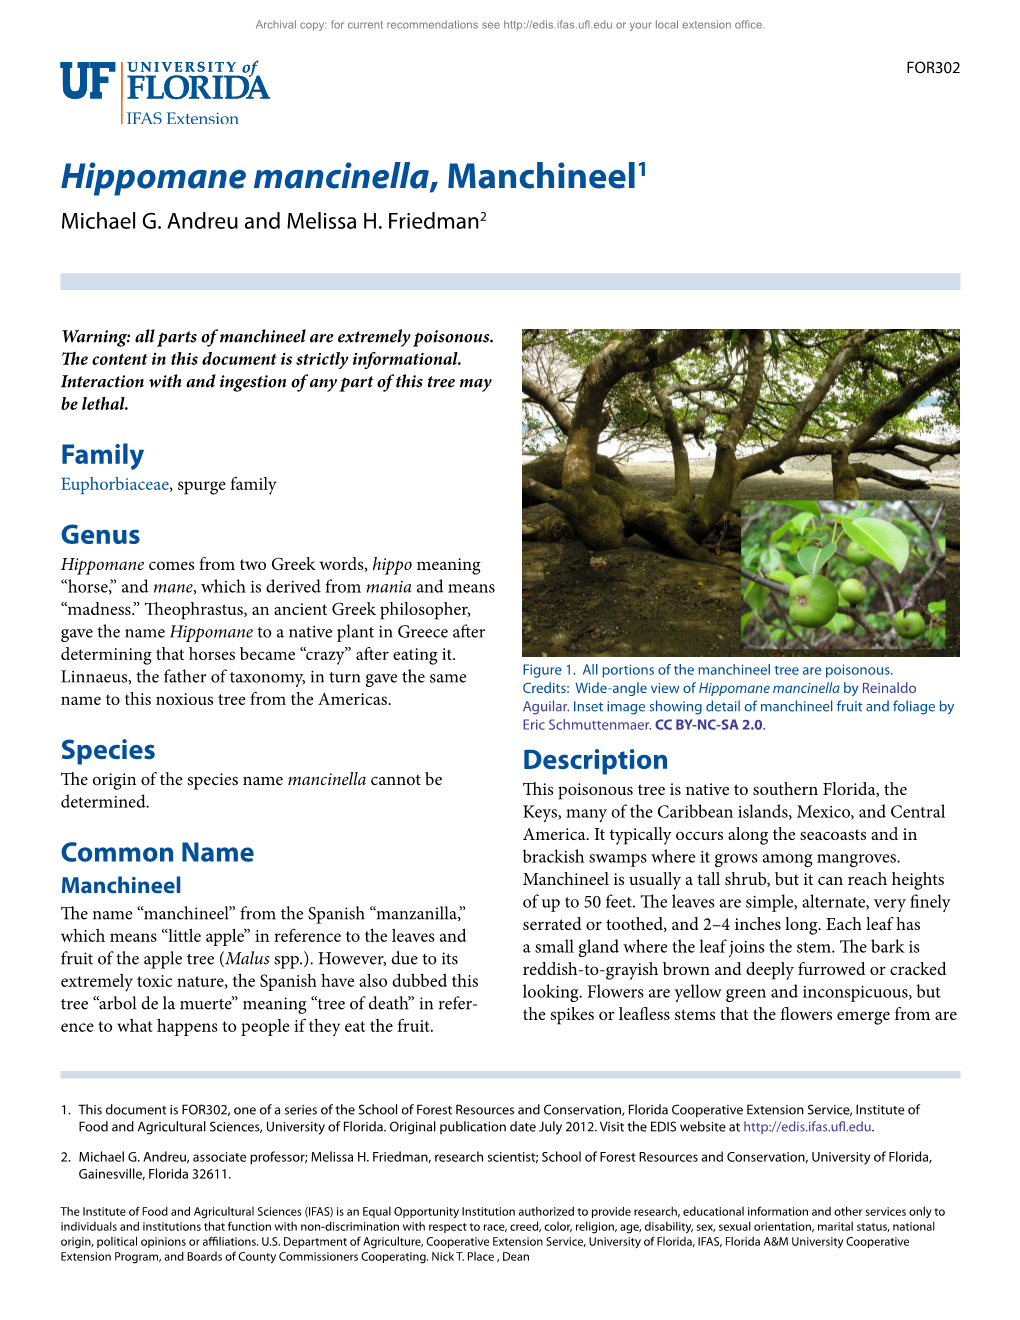 Hippomane Mancinella, Manchineel1 Michael G